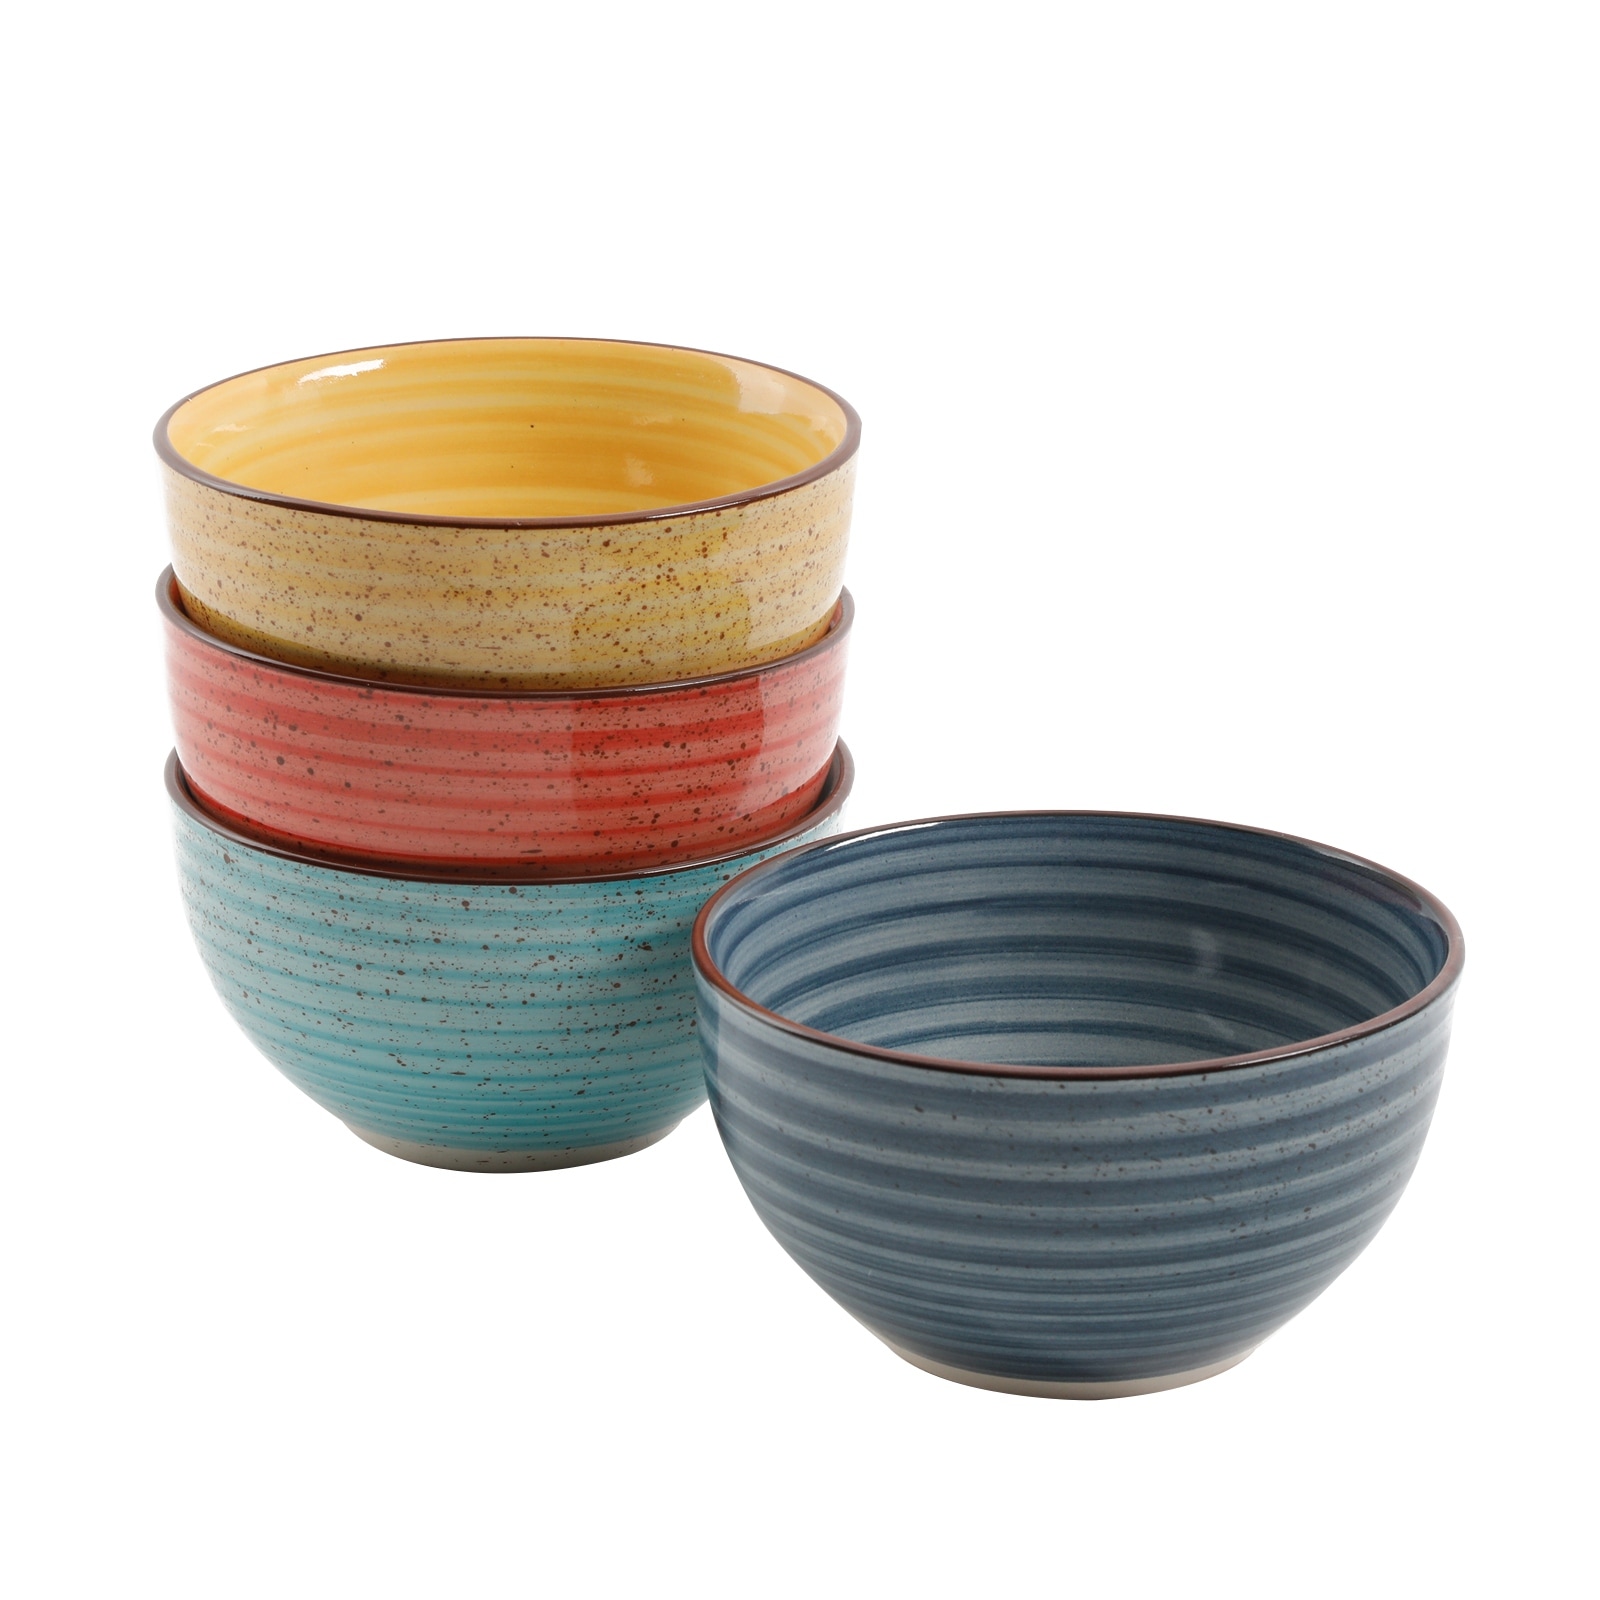 Gibson Home Cereal Bowl Set, Ceramic, Color Speckle